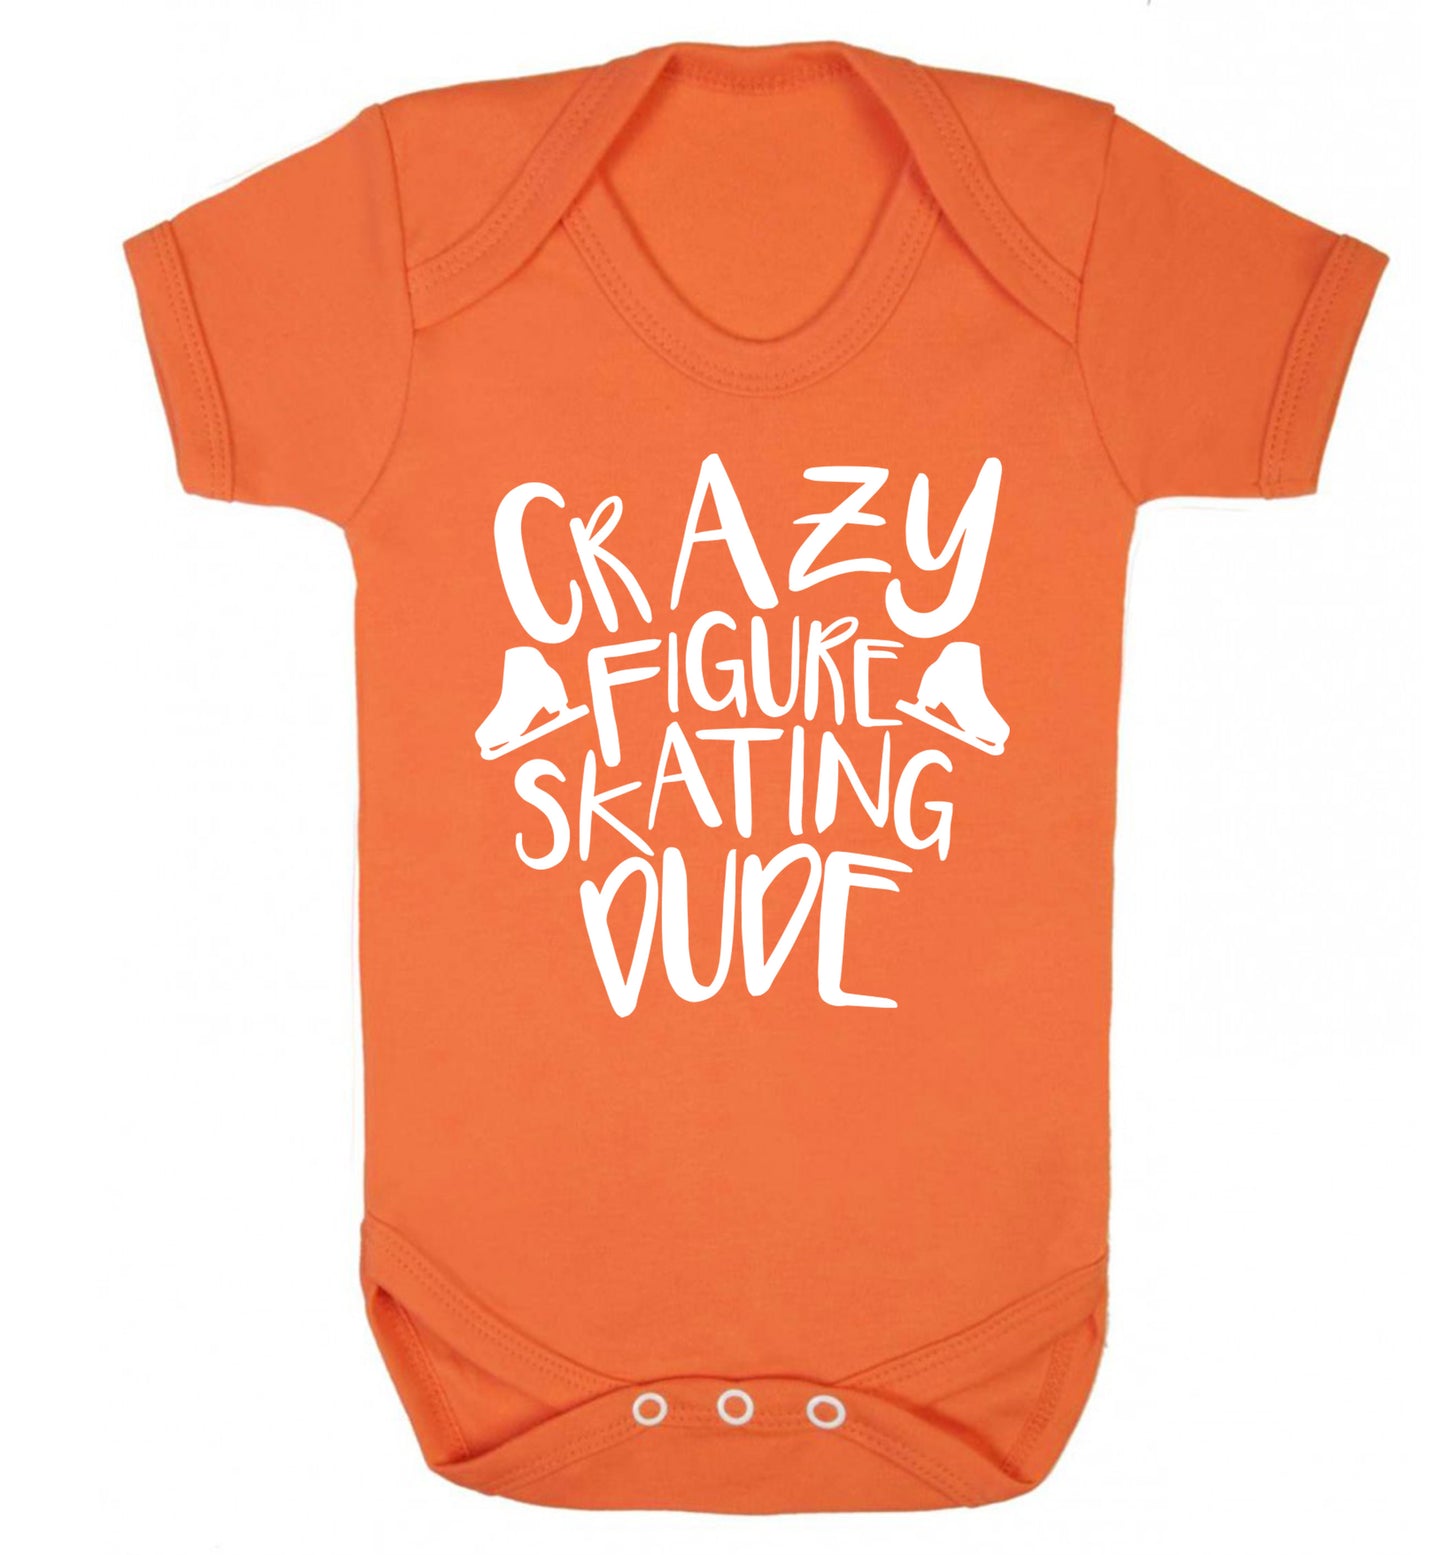 Crazy figure skating dude Baby Vest orange 18-24 months